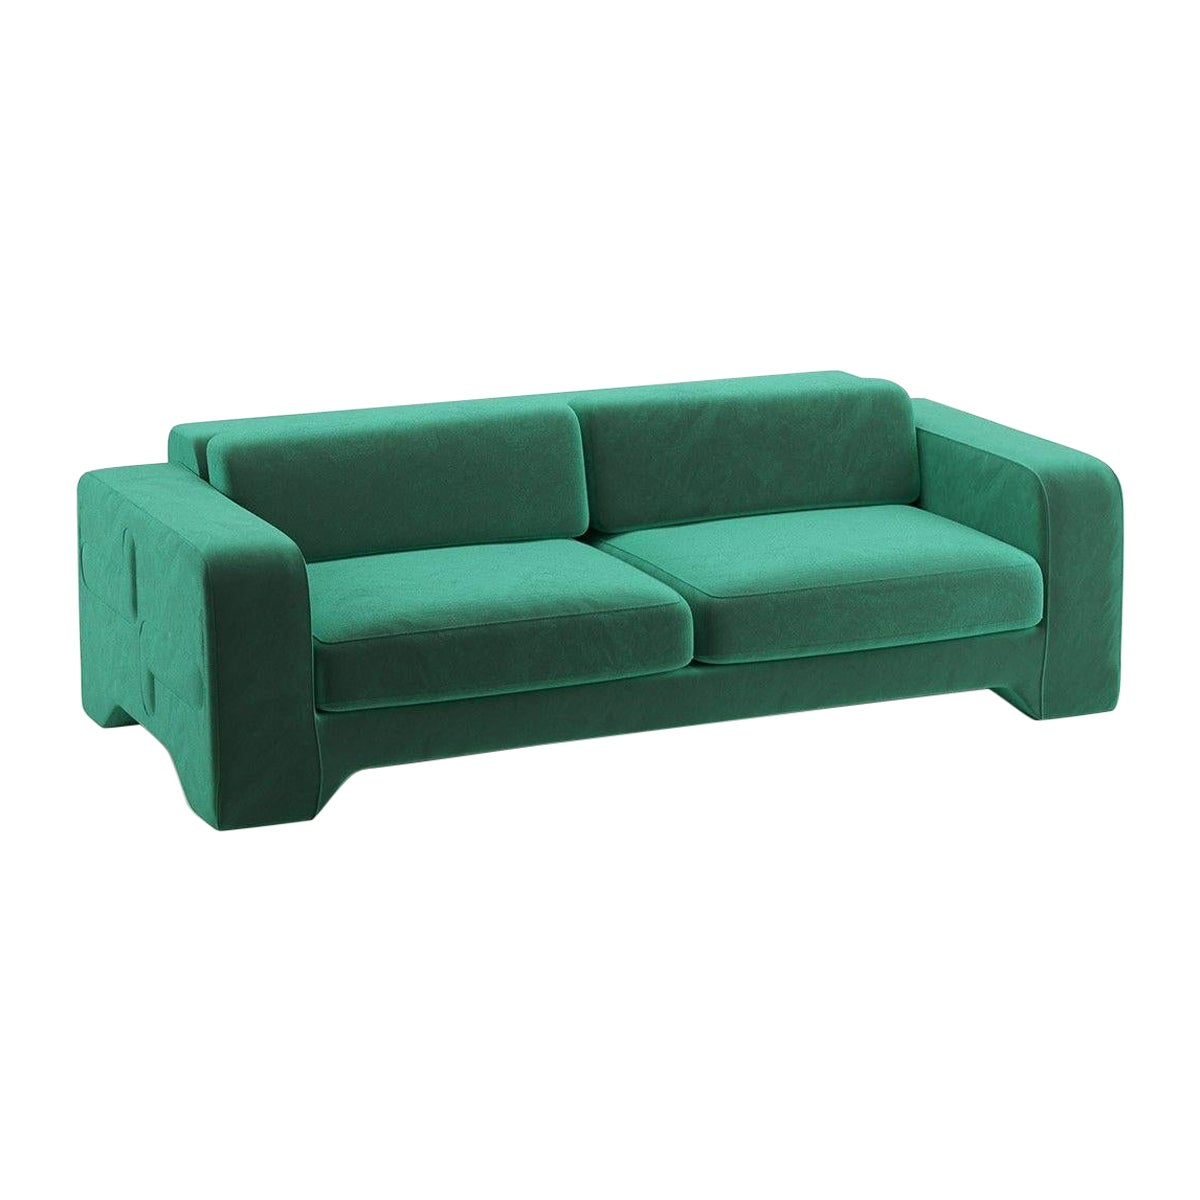 Popus Editions Giovanna 4 Seater Sofa in Green '772256' Como Velvet Upholstery